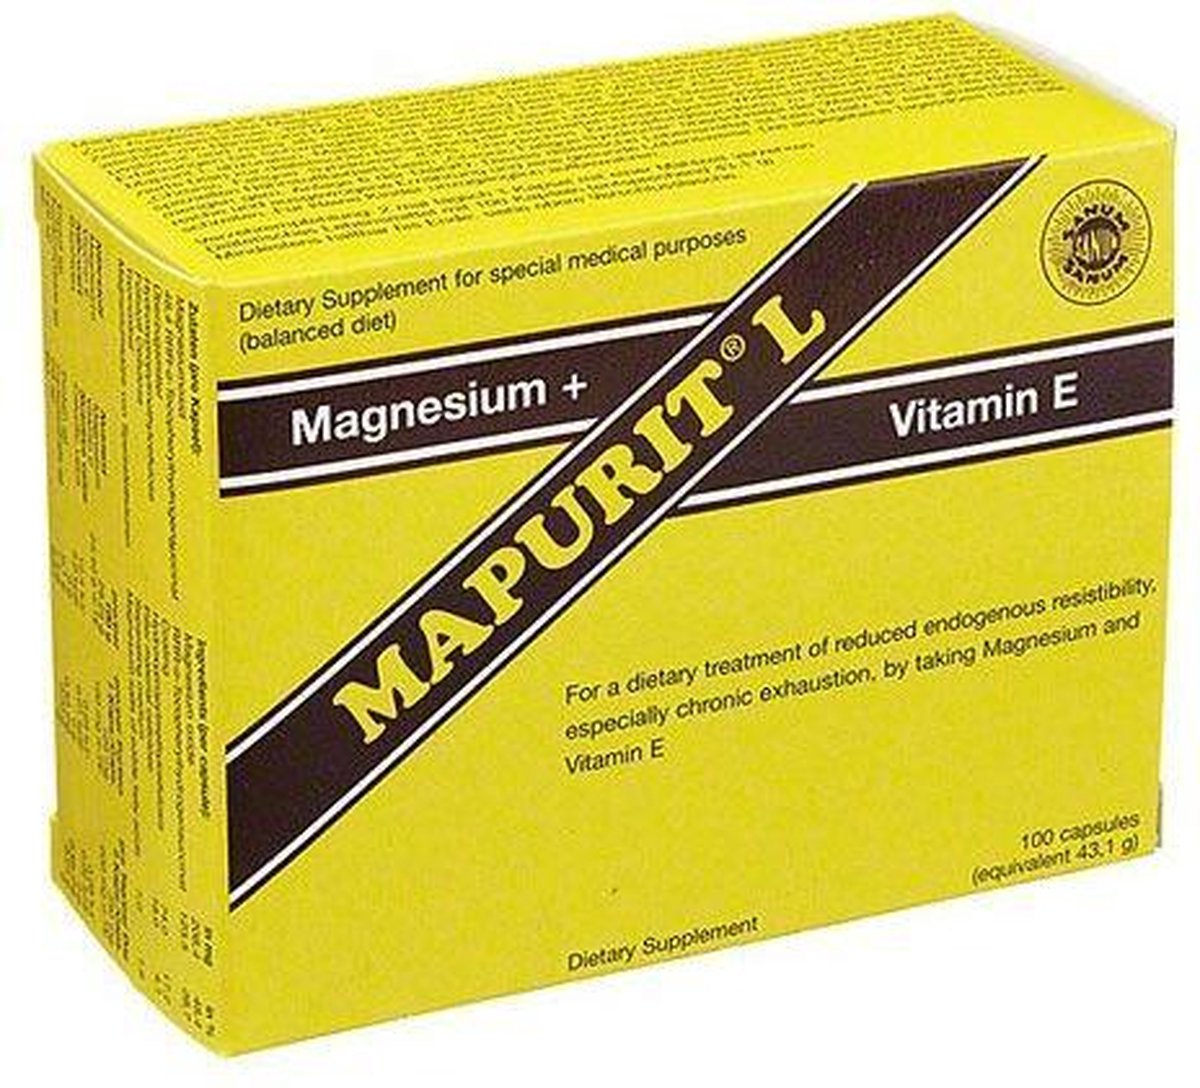 Mapurit - magnesium + Vit E